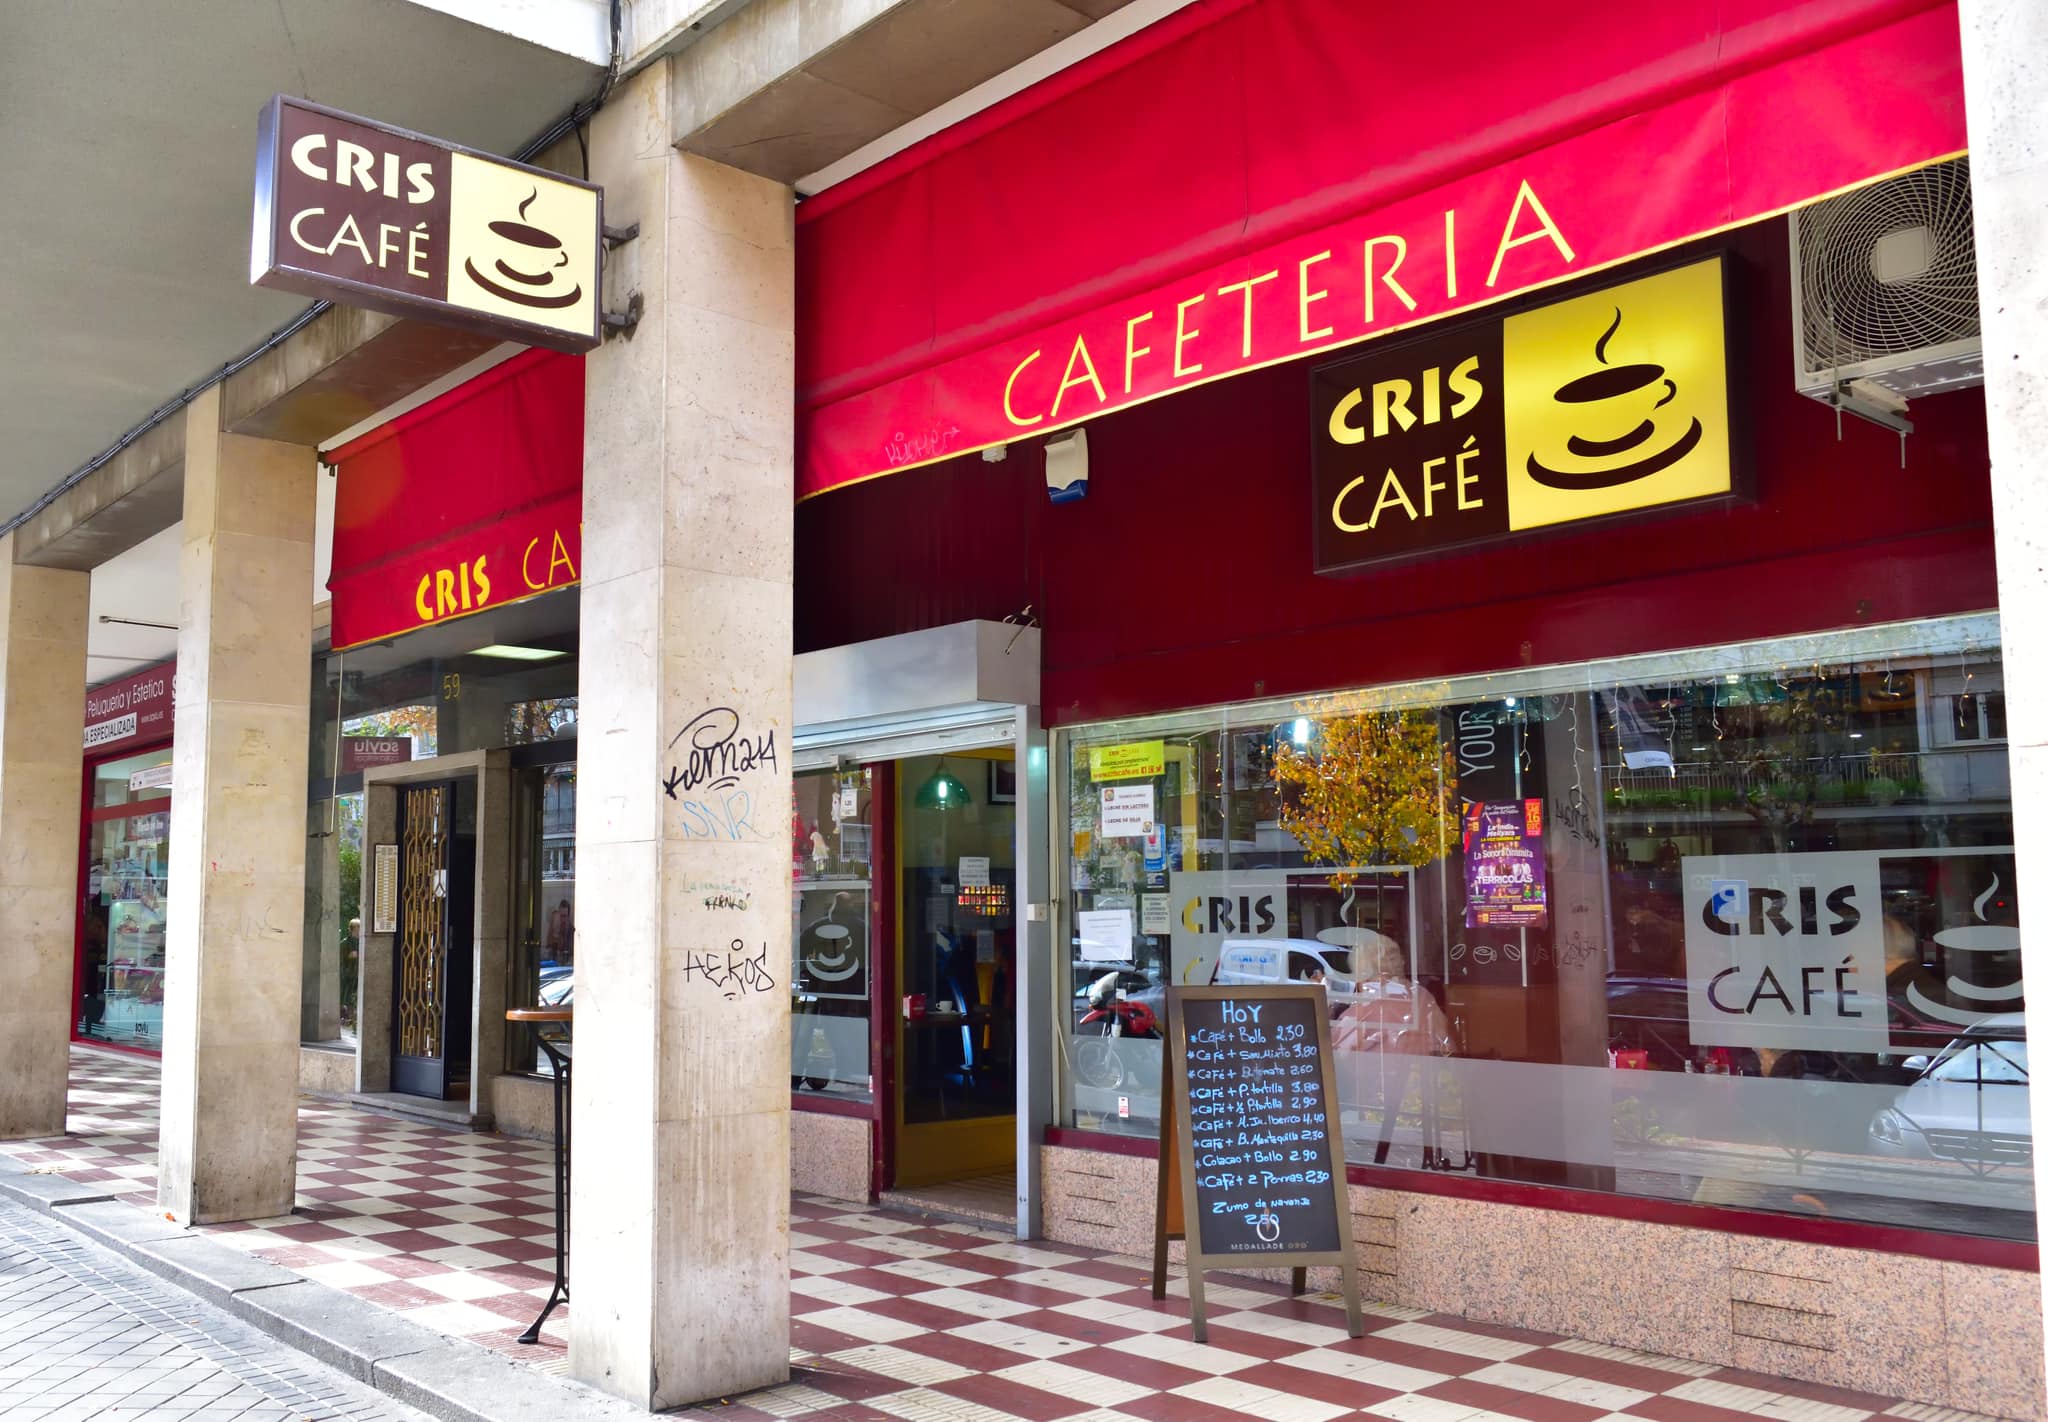 Restaurante en Madrid Cris Café 70 Barrio de Salamanca